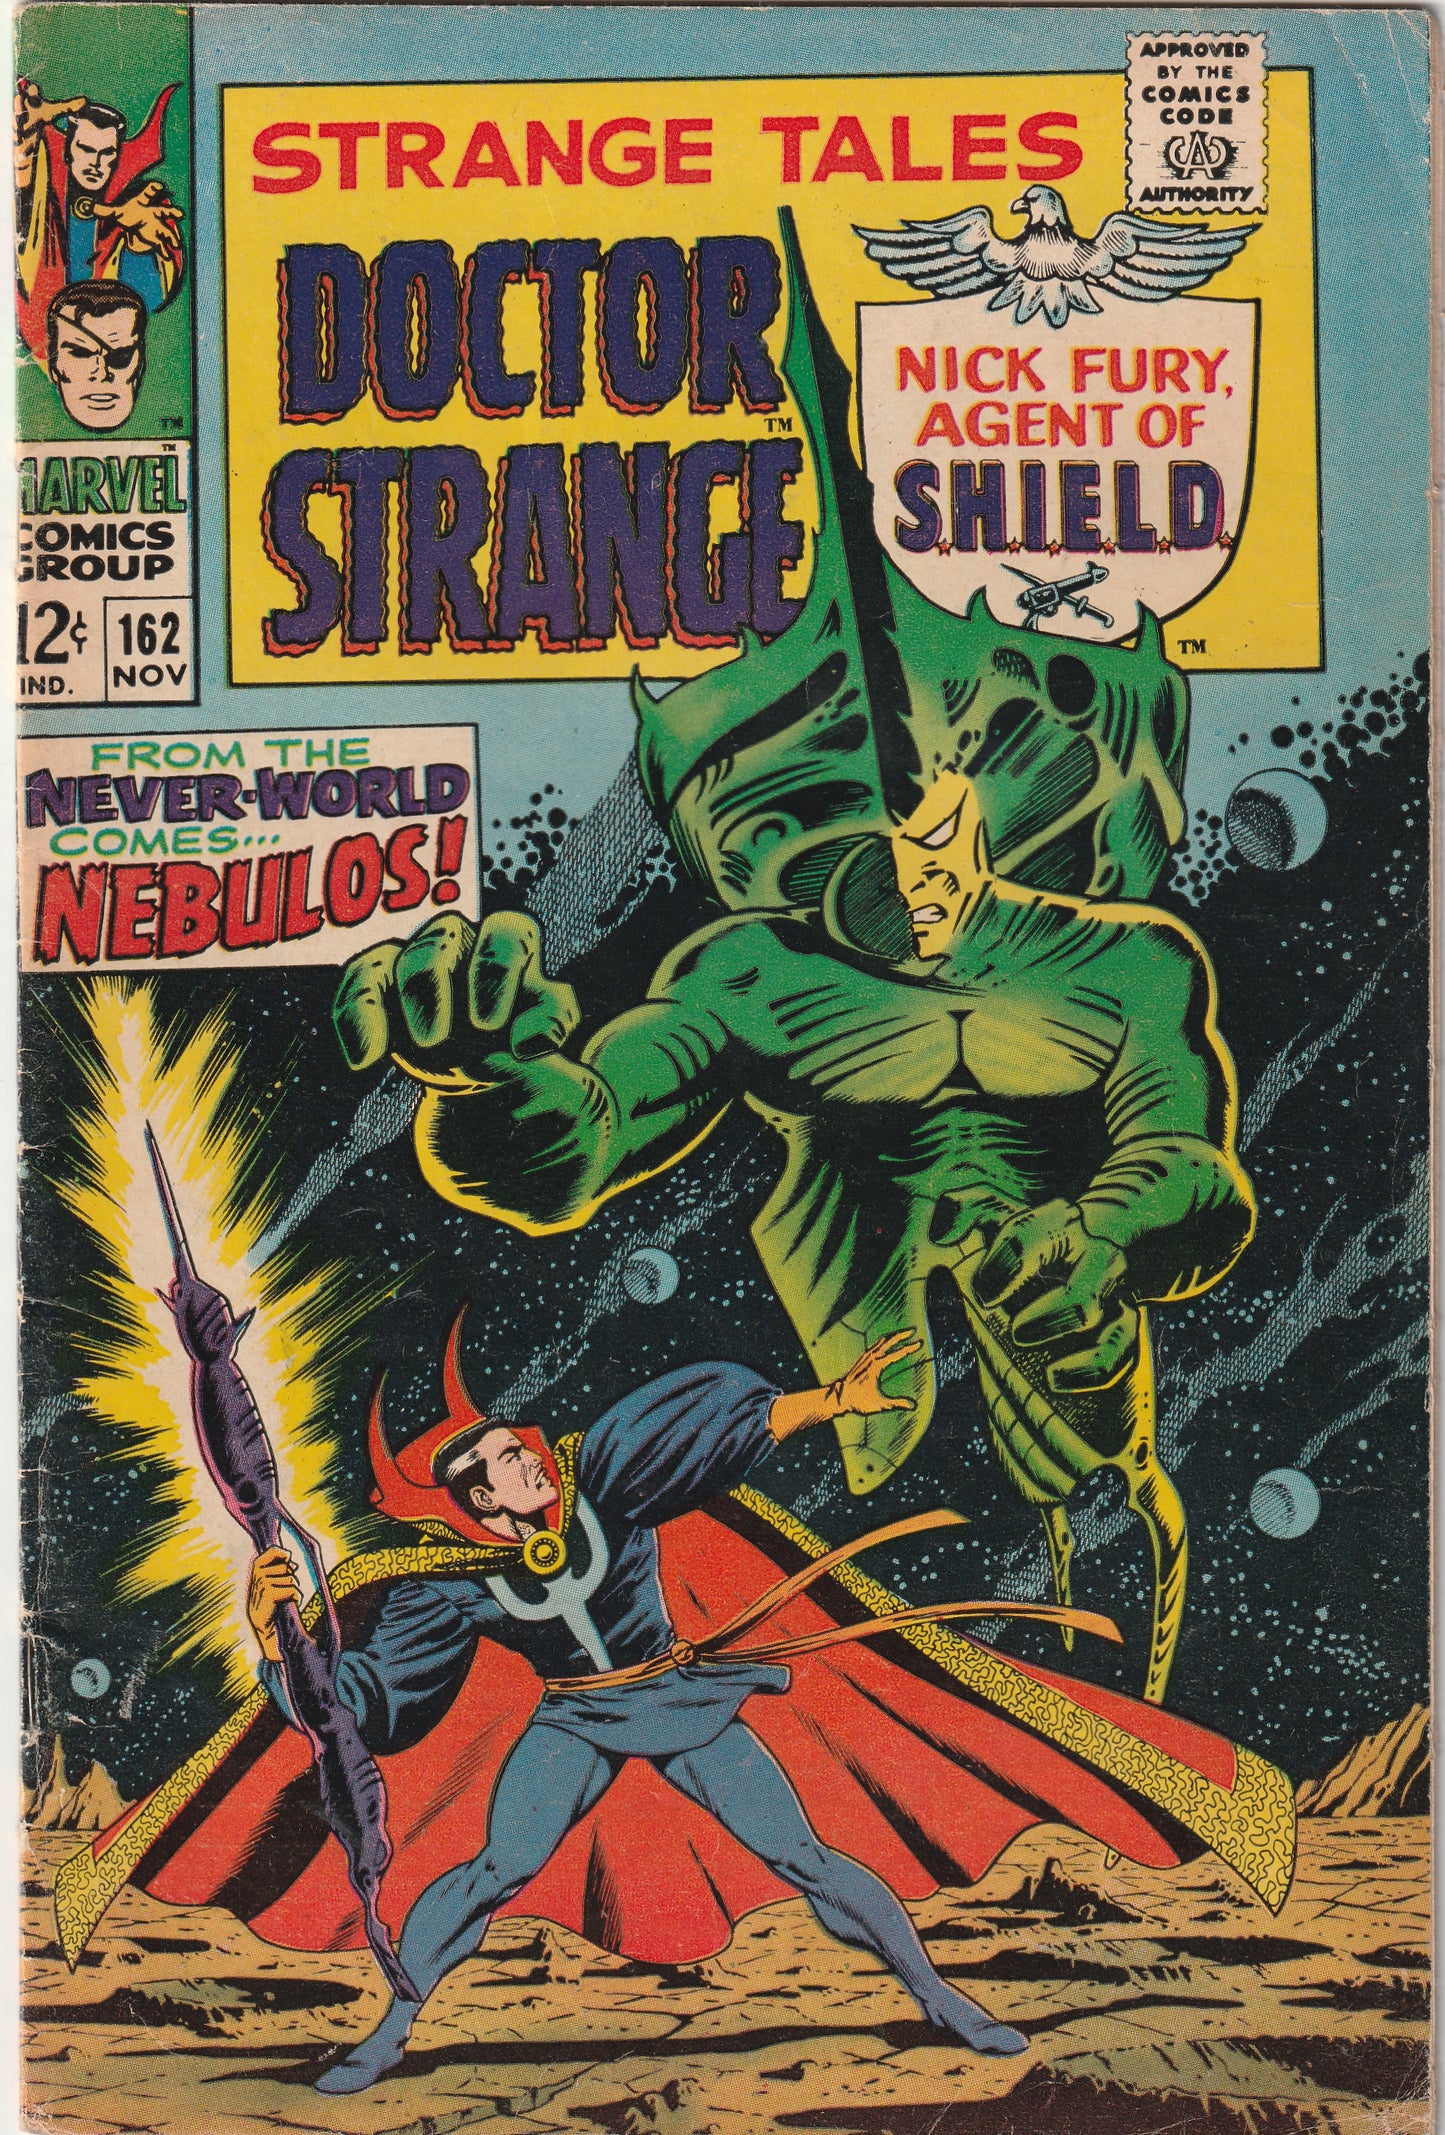 Strange Tales #162 (1967) - Steranko art/scripts; Captain America appearance